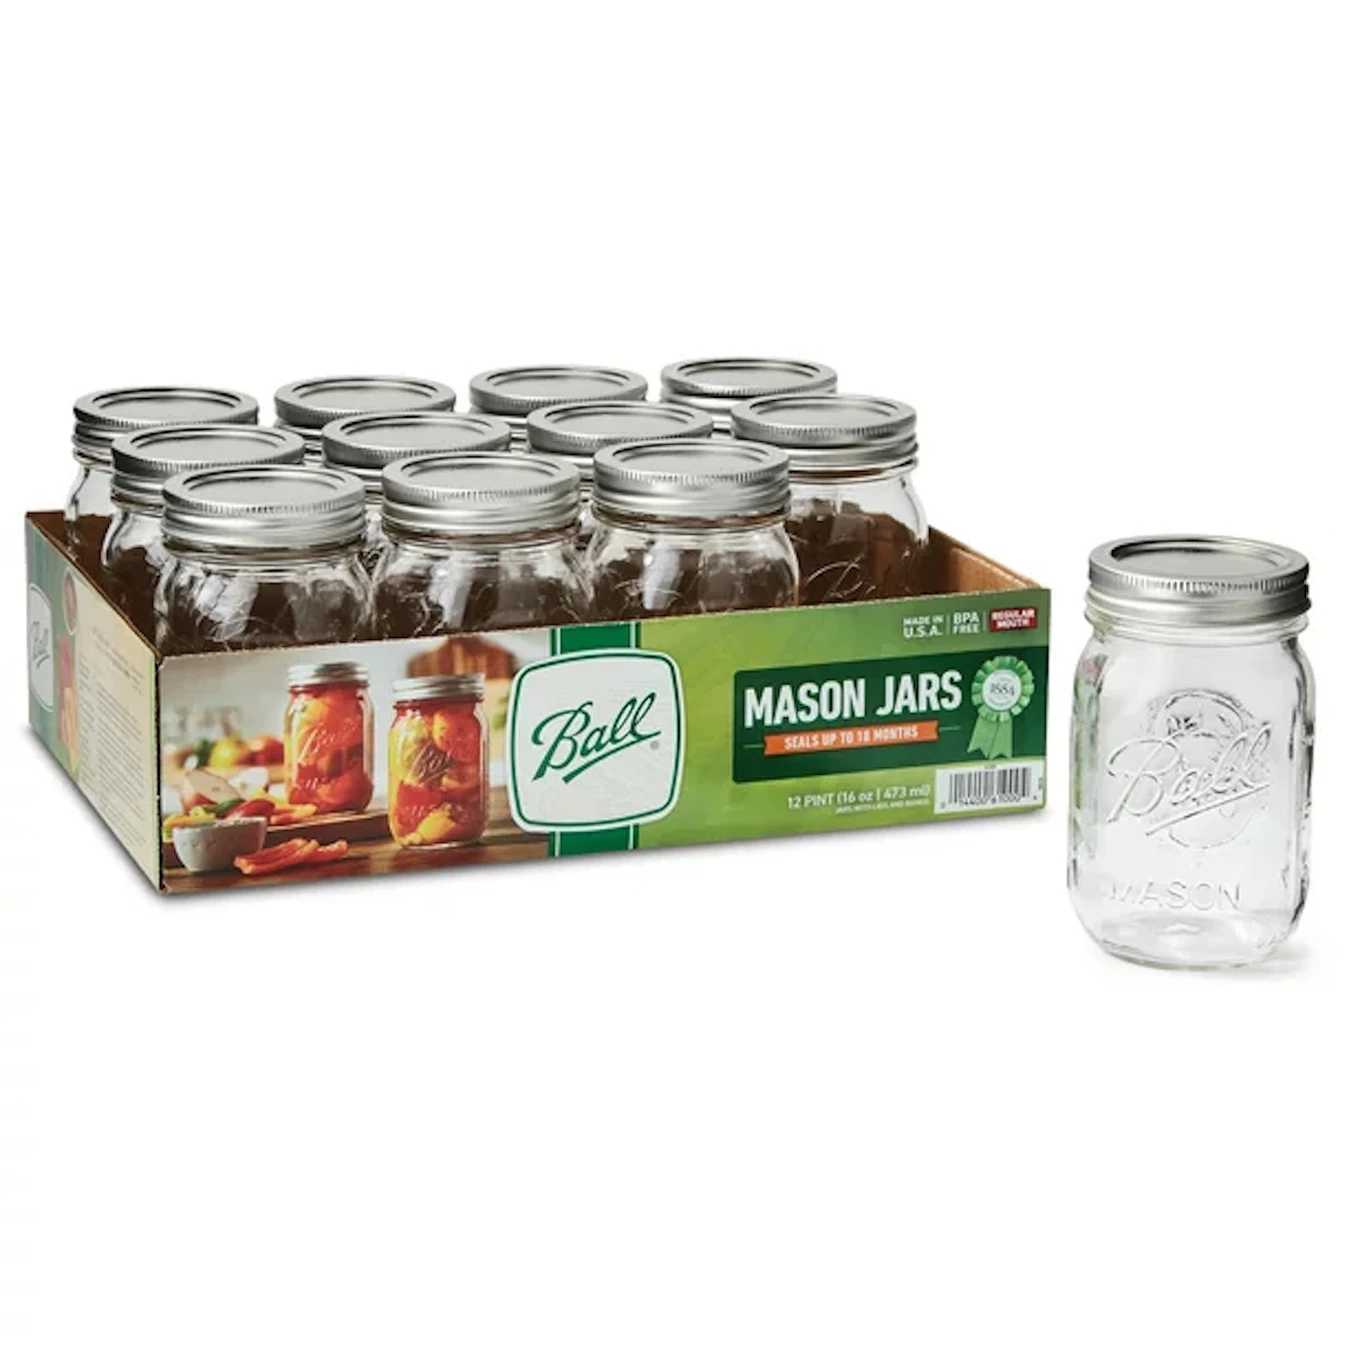 A set of 12 clear glass mason jars with metal lids sit in a cardboard flat box.